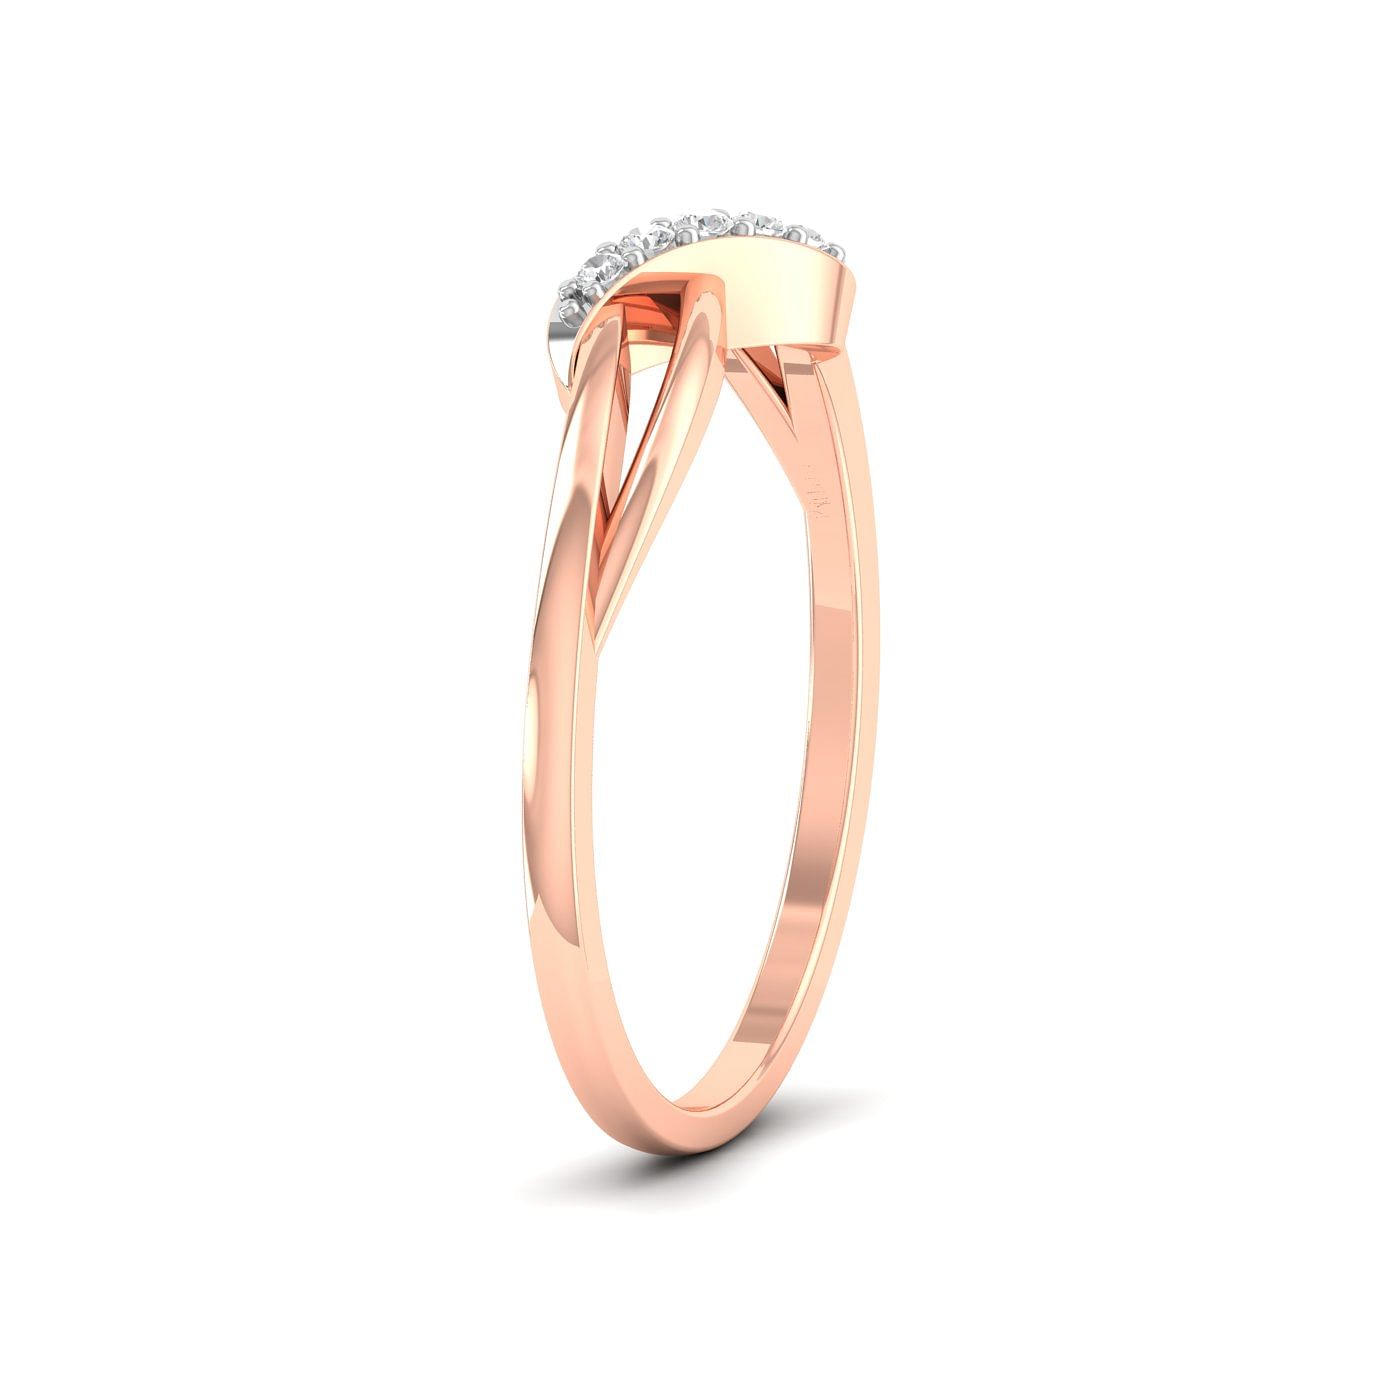 Summer Five Stone Diamond Ring For Rose Gold Female